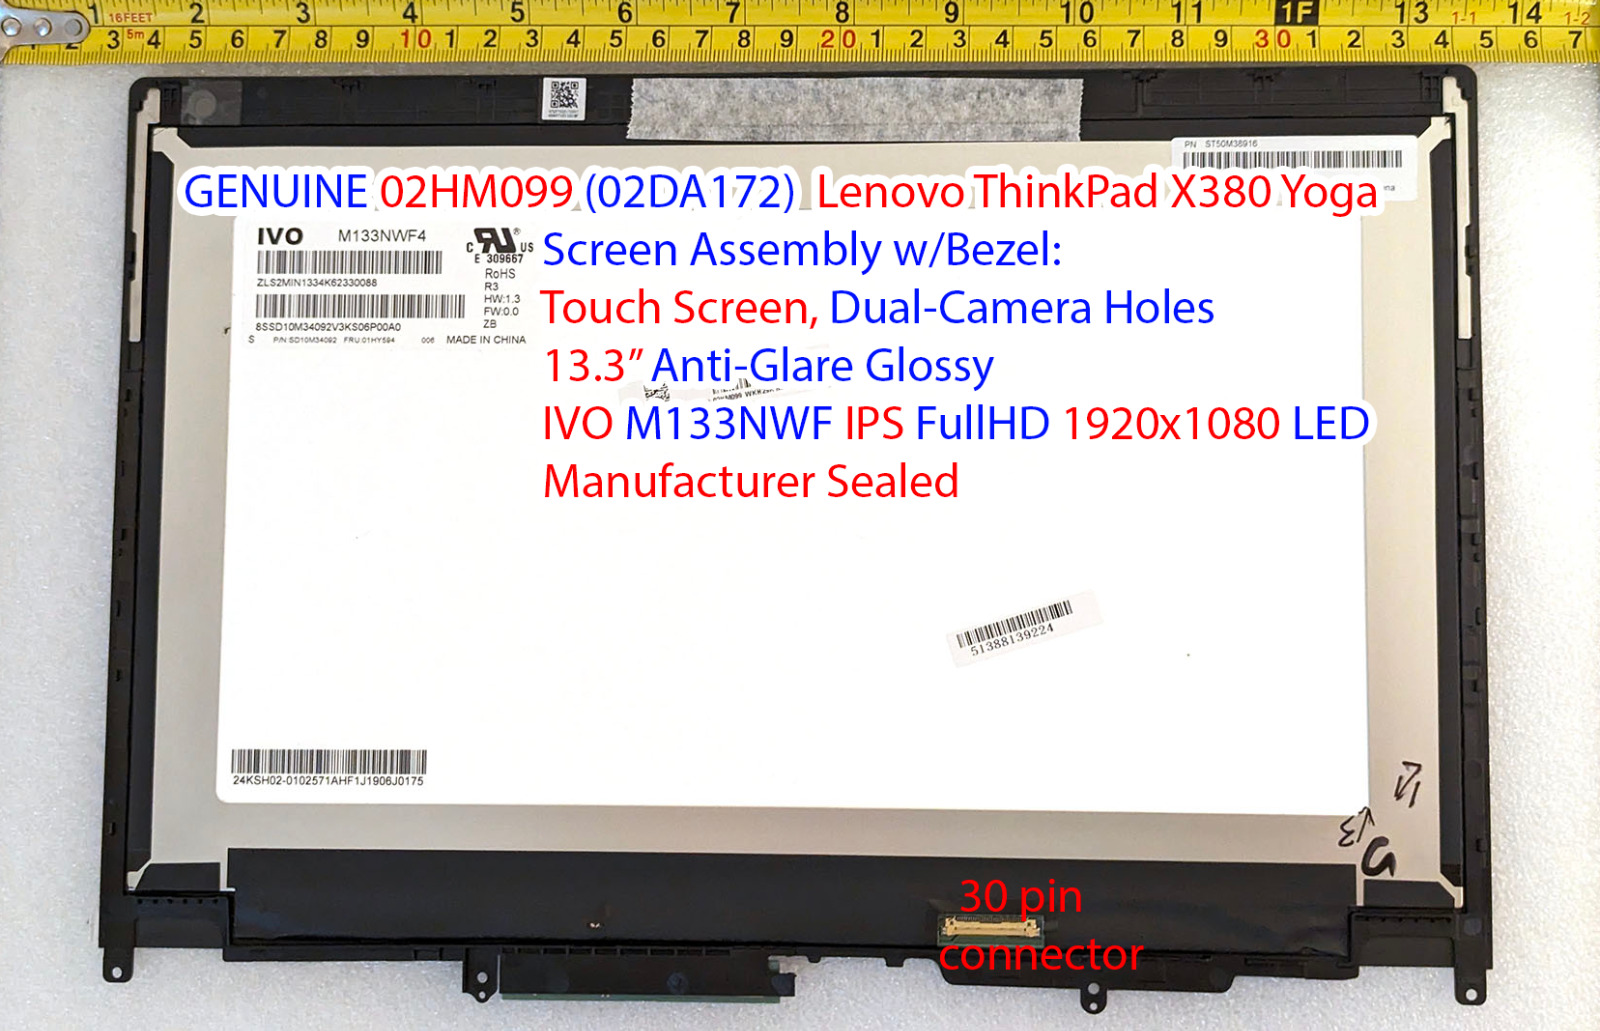 GENUINE 02HM099 Lenovo ThinkPad X380 Yoga Screen + Touch + Bezel w./IR 02DA172